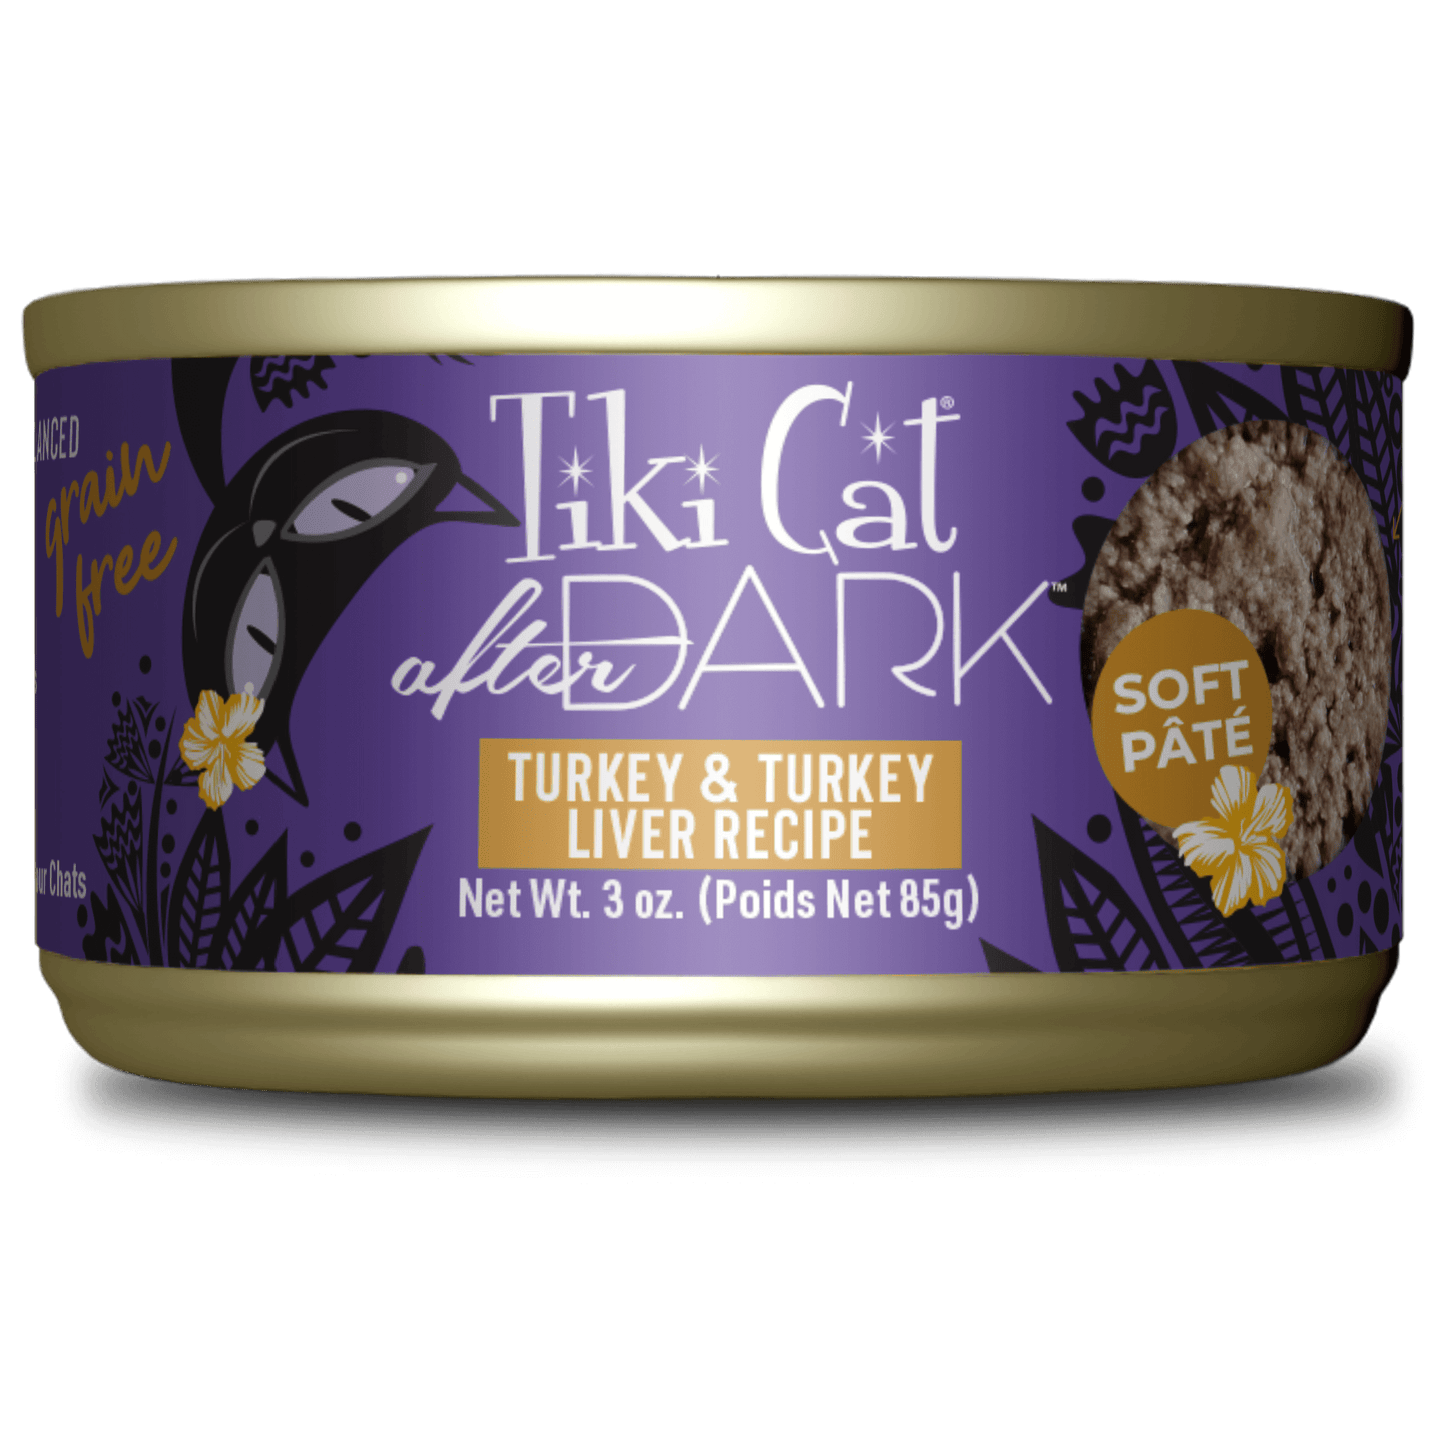 Tiki Cat® After Dark™ Soft Paté Turkey & Turkey Liver Recipe